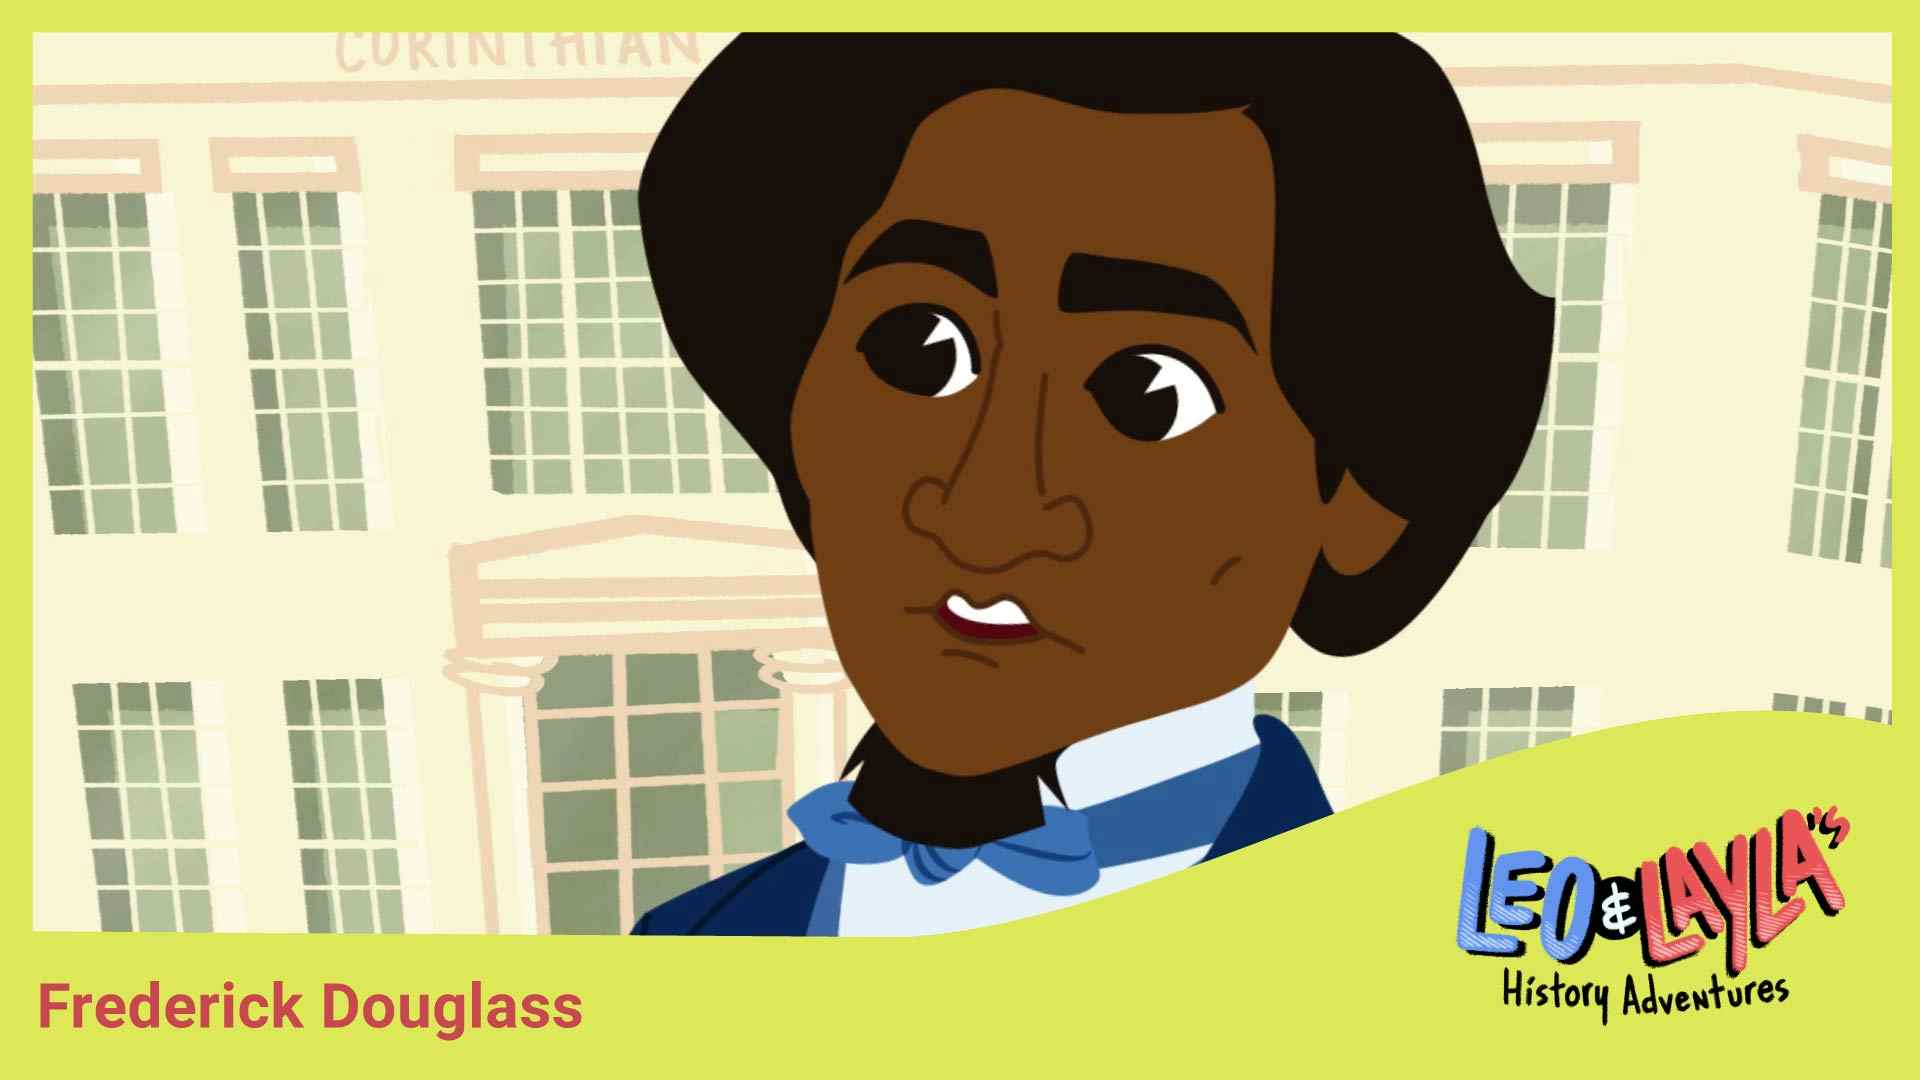 Frederick Douglass: The Outspoken Abolitionist